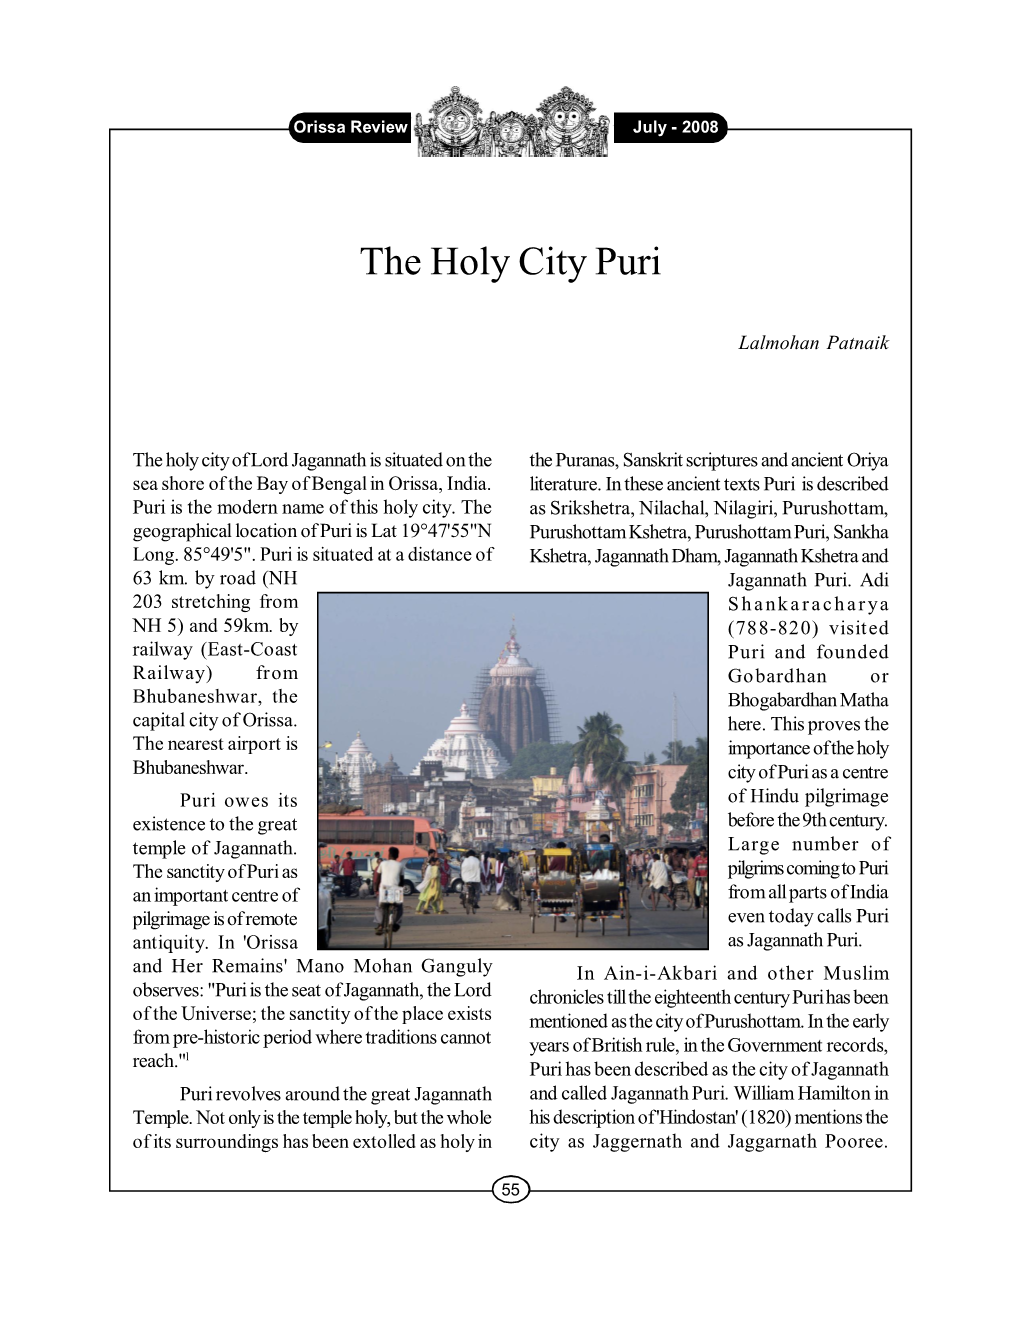 The Holy City Puri